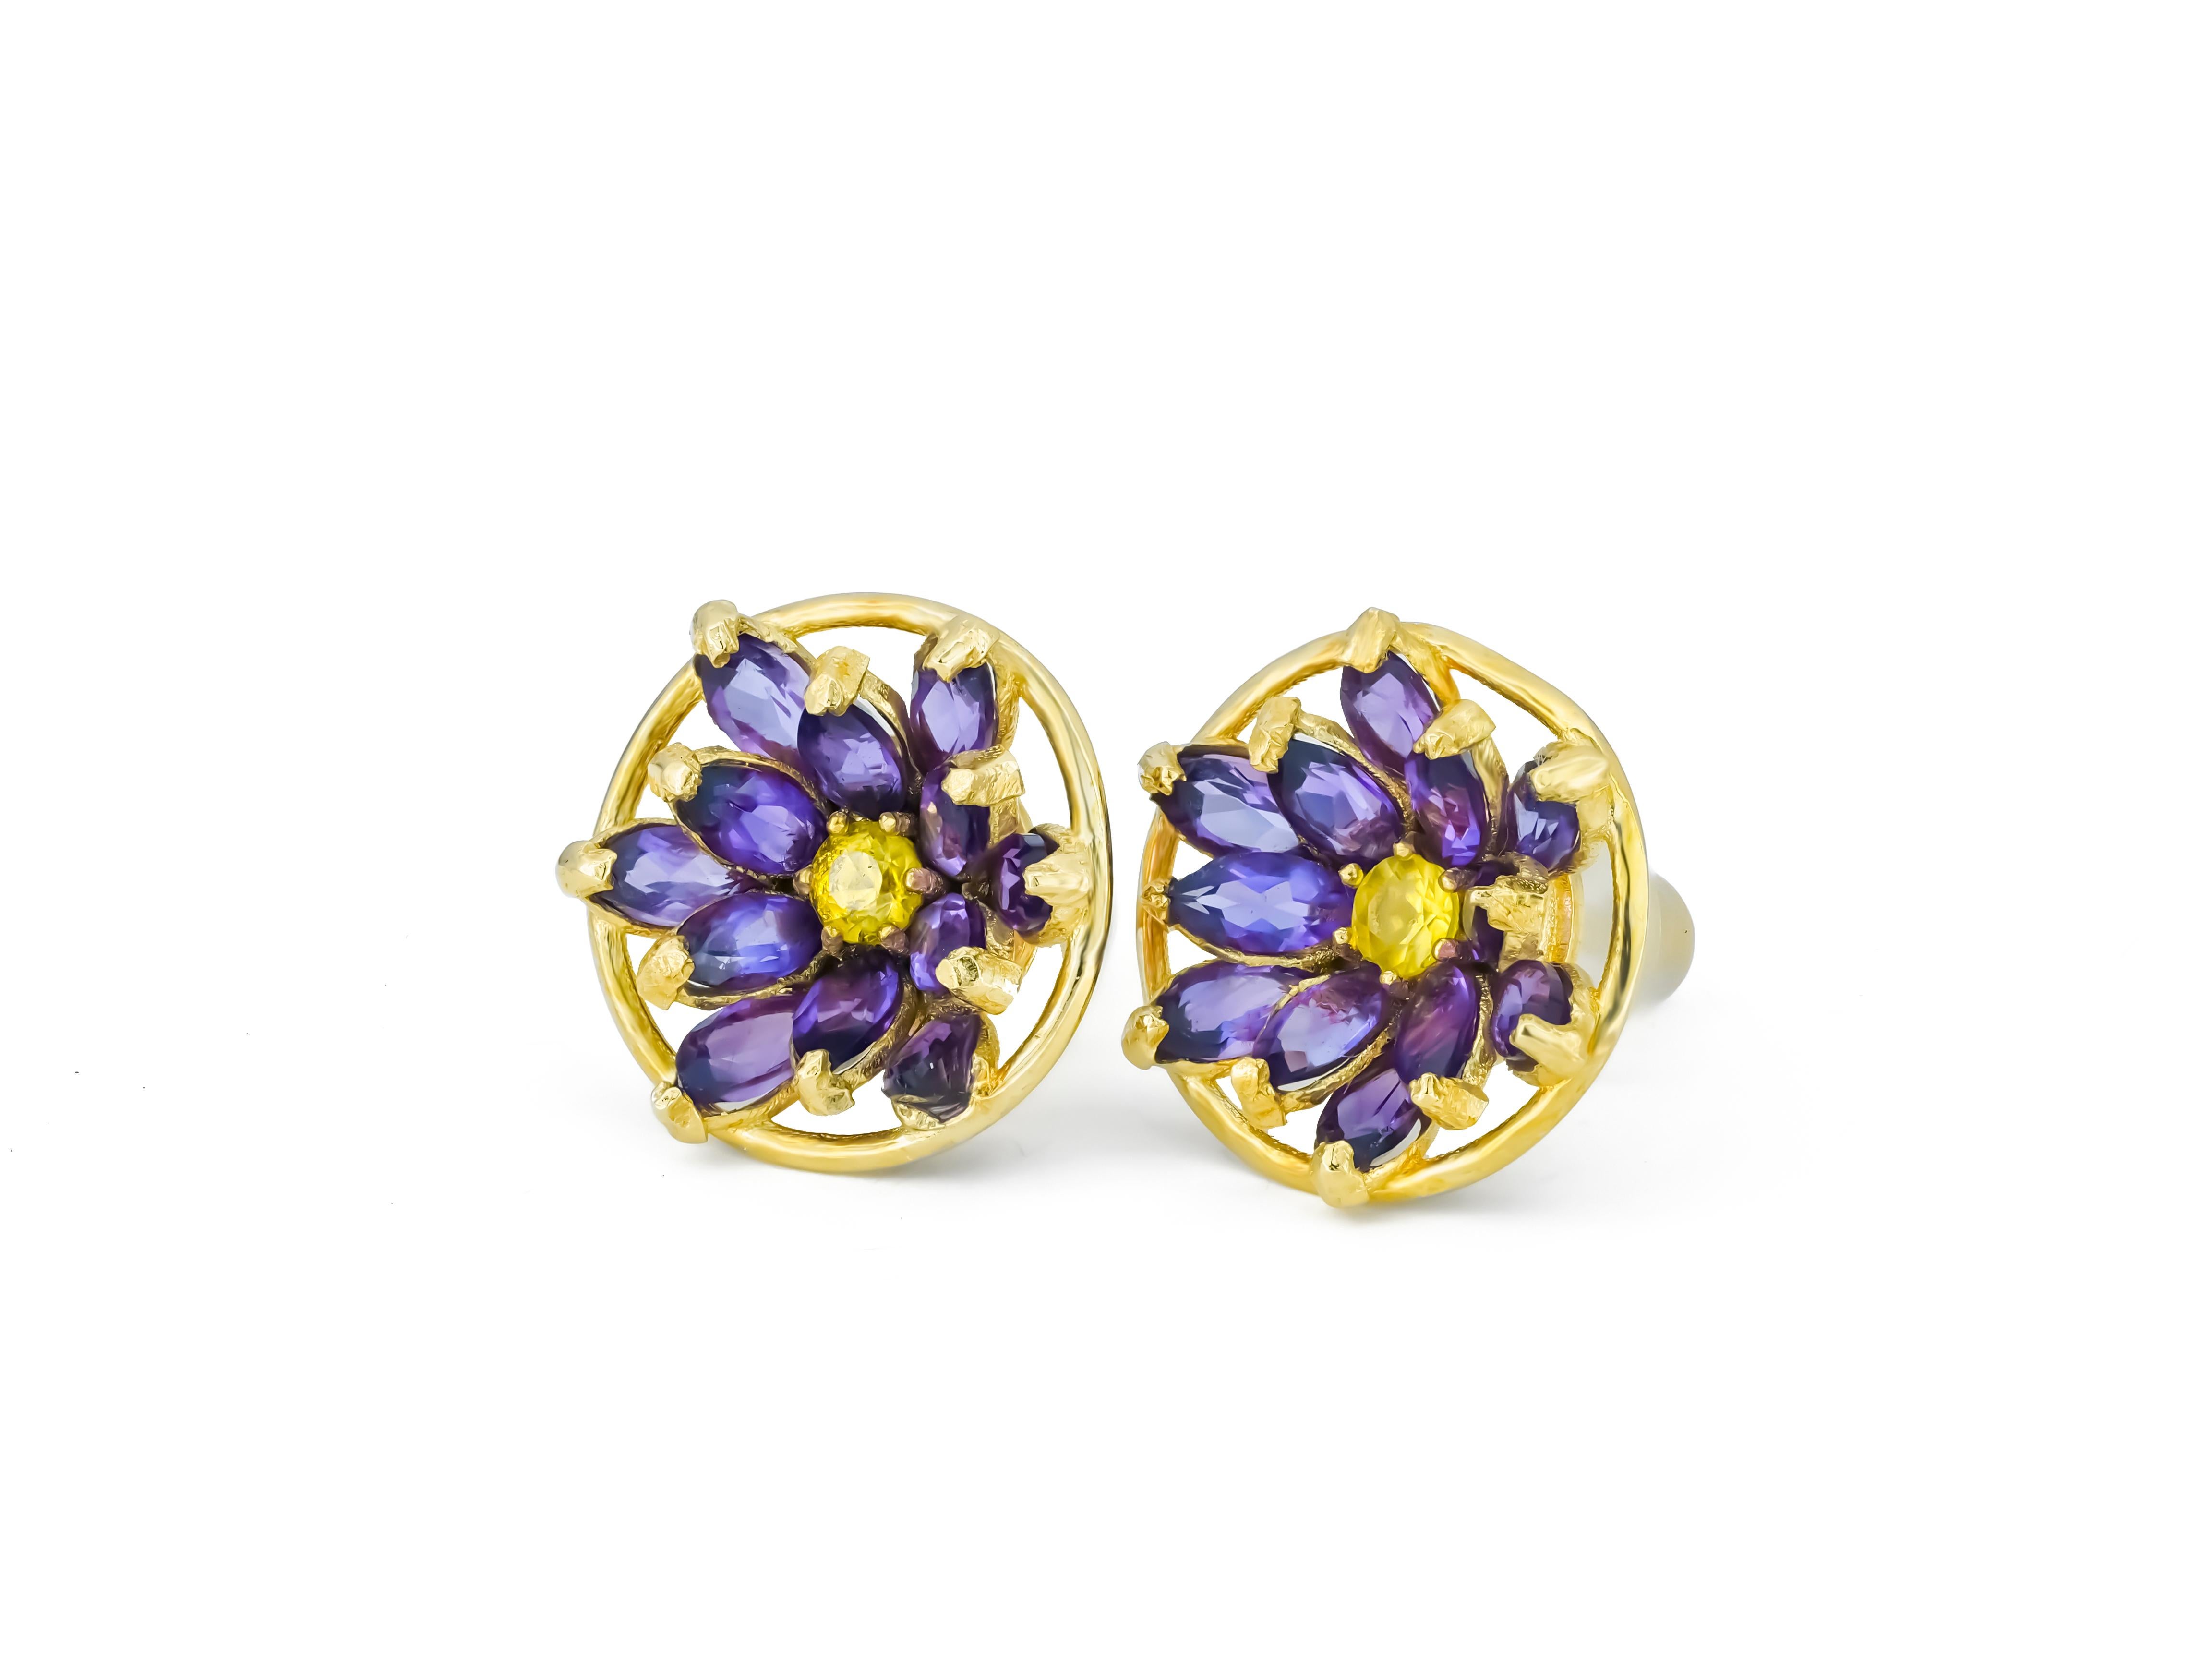 Lotus Flower Earrings Studs in 14k Gold, Amethyst and Sapphires Earrings For Sale 7